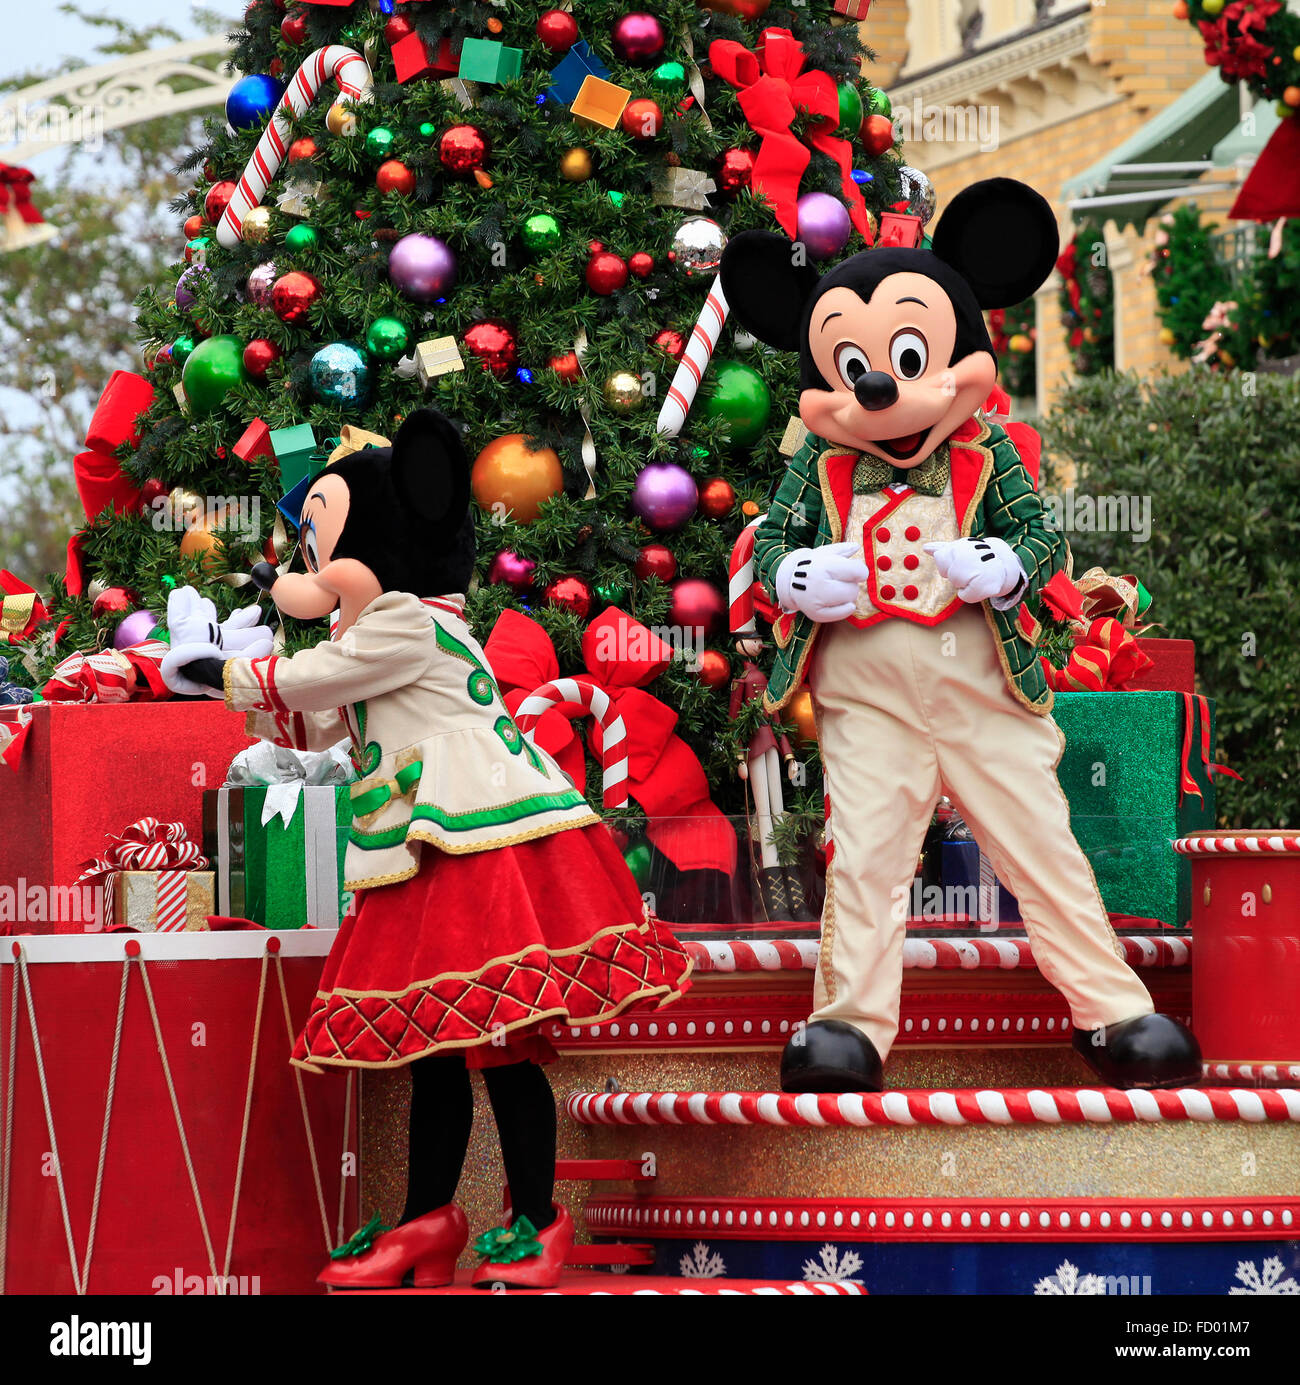 Immagini Natalizie Topolino E Minnie.Holiday Topolino E Minnie Mouse Sulla Parata Natalizia Di Magic Kingdom Orlando Florida Foto Stock Alamy